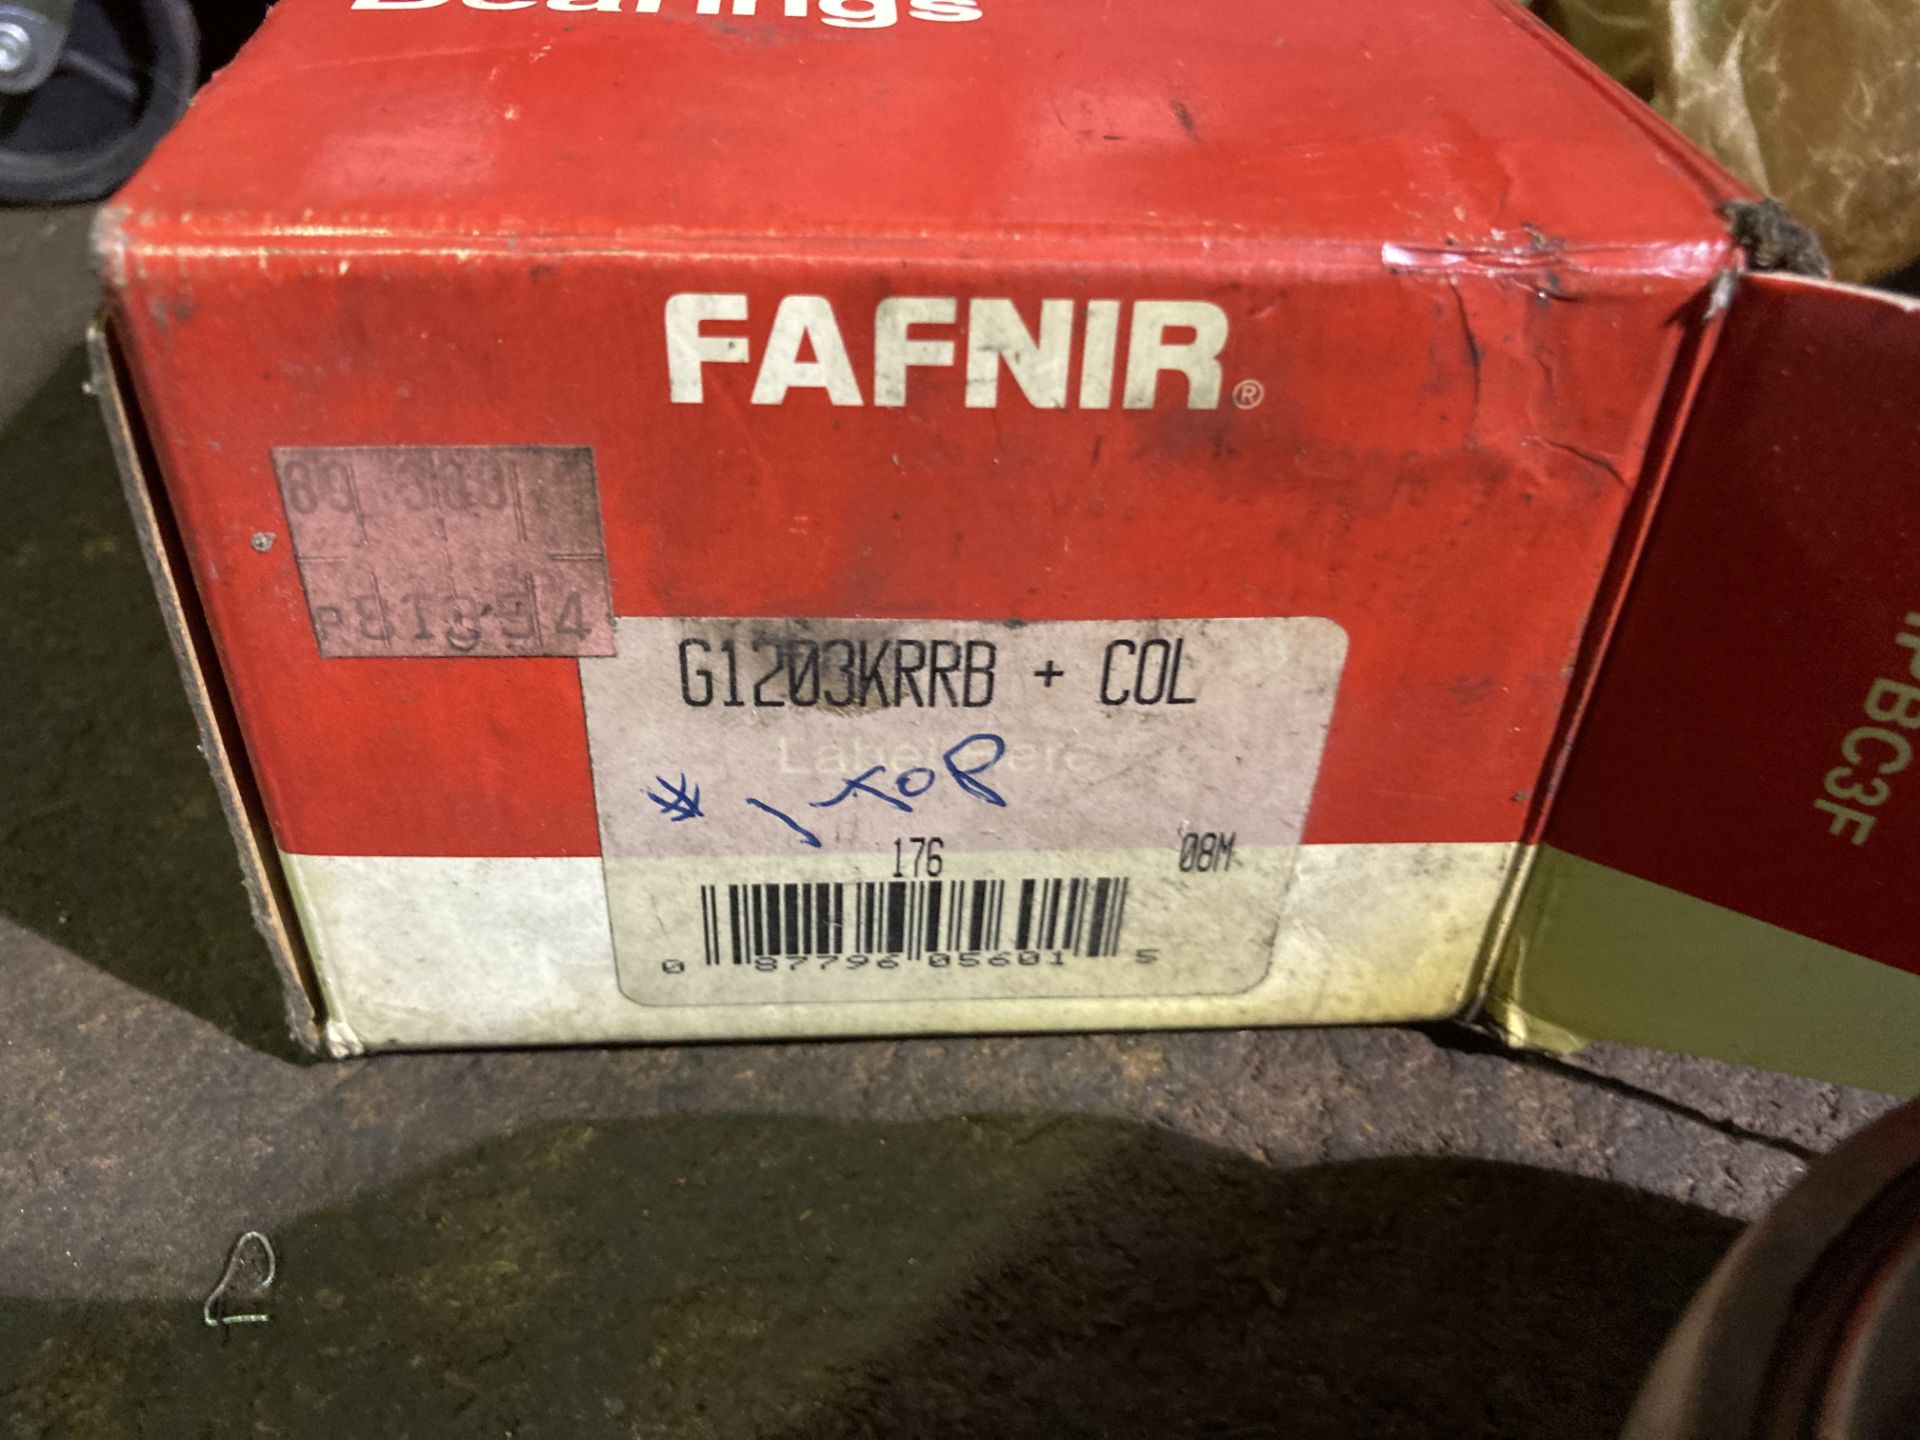 (2) Fafnir Ball Bearins, P/N: G1203KRRB + COL - Image 4 of 6